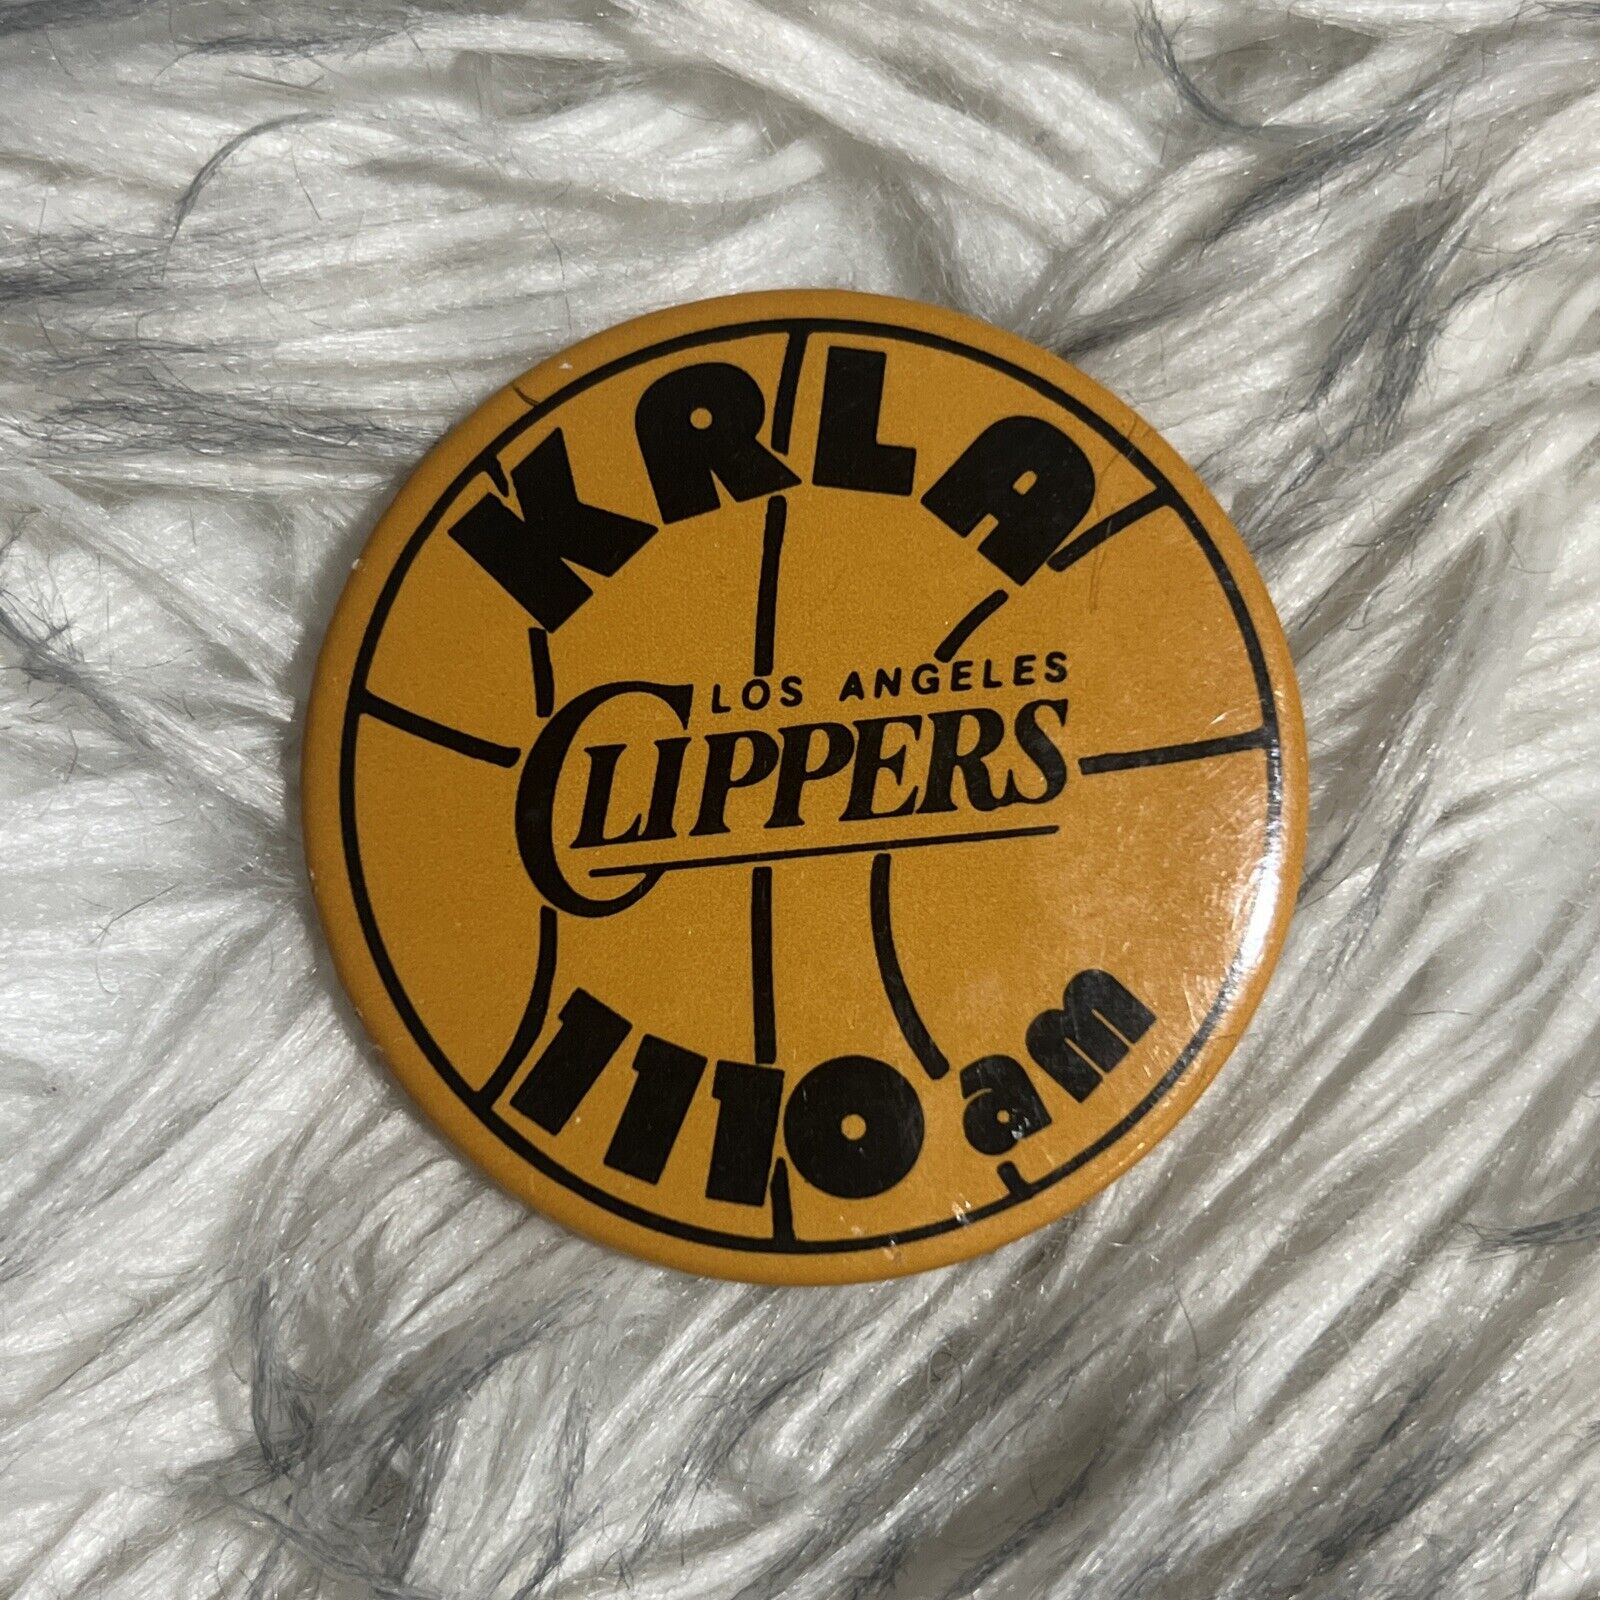 Vintage Button Pin Back Los Angelos Clippers KRLA 1110 Am